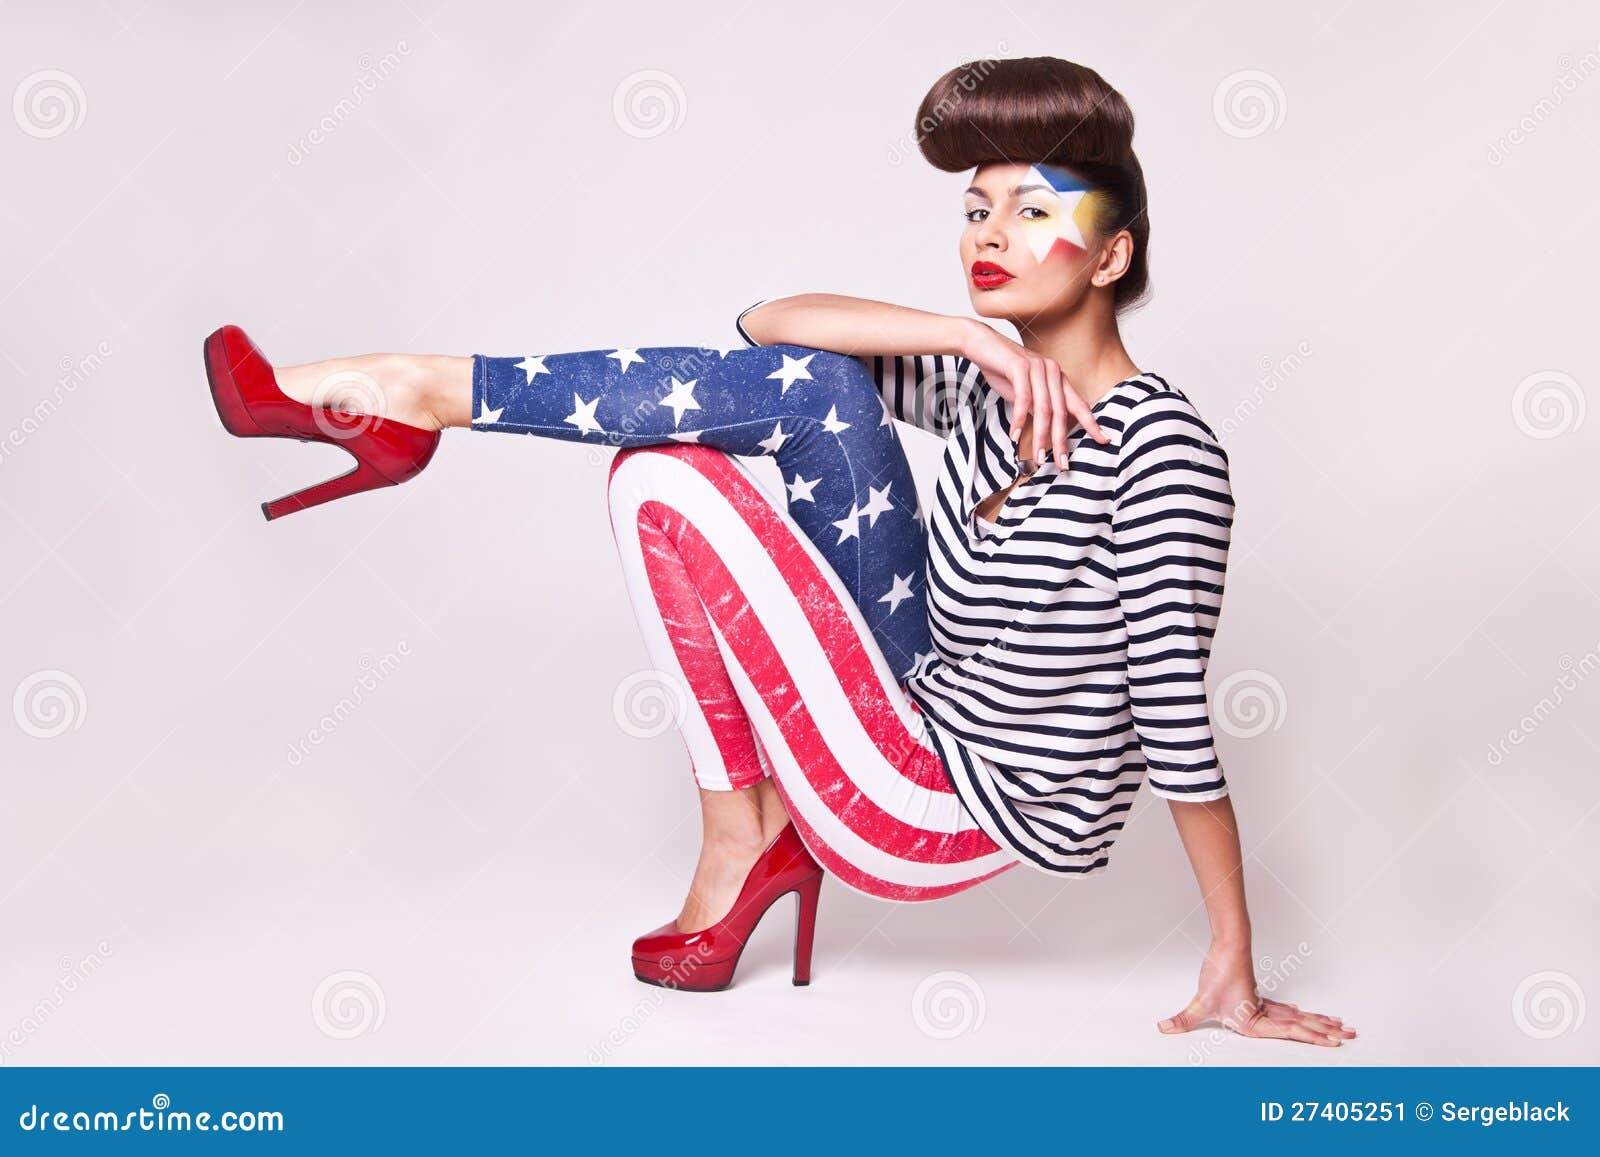 Fashion Model in American Flag Leggings Stock Image - Image of honor,  joyful: 27405251